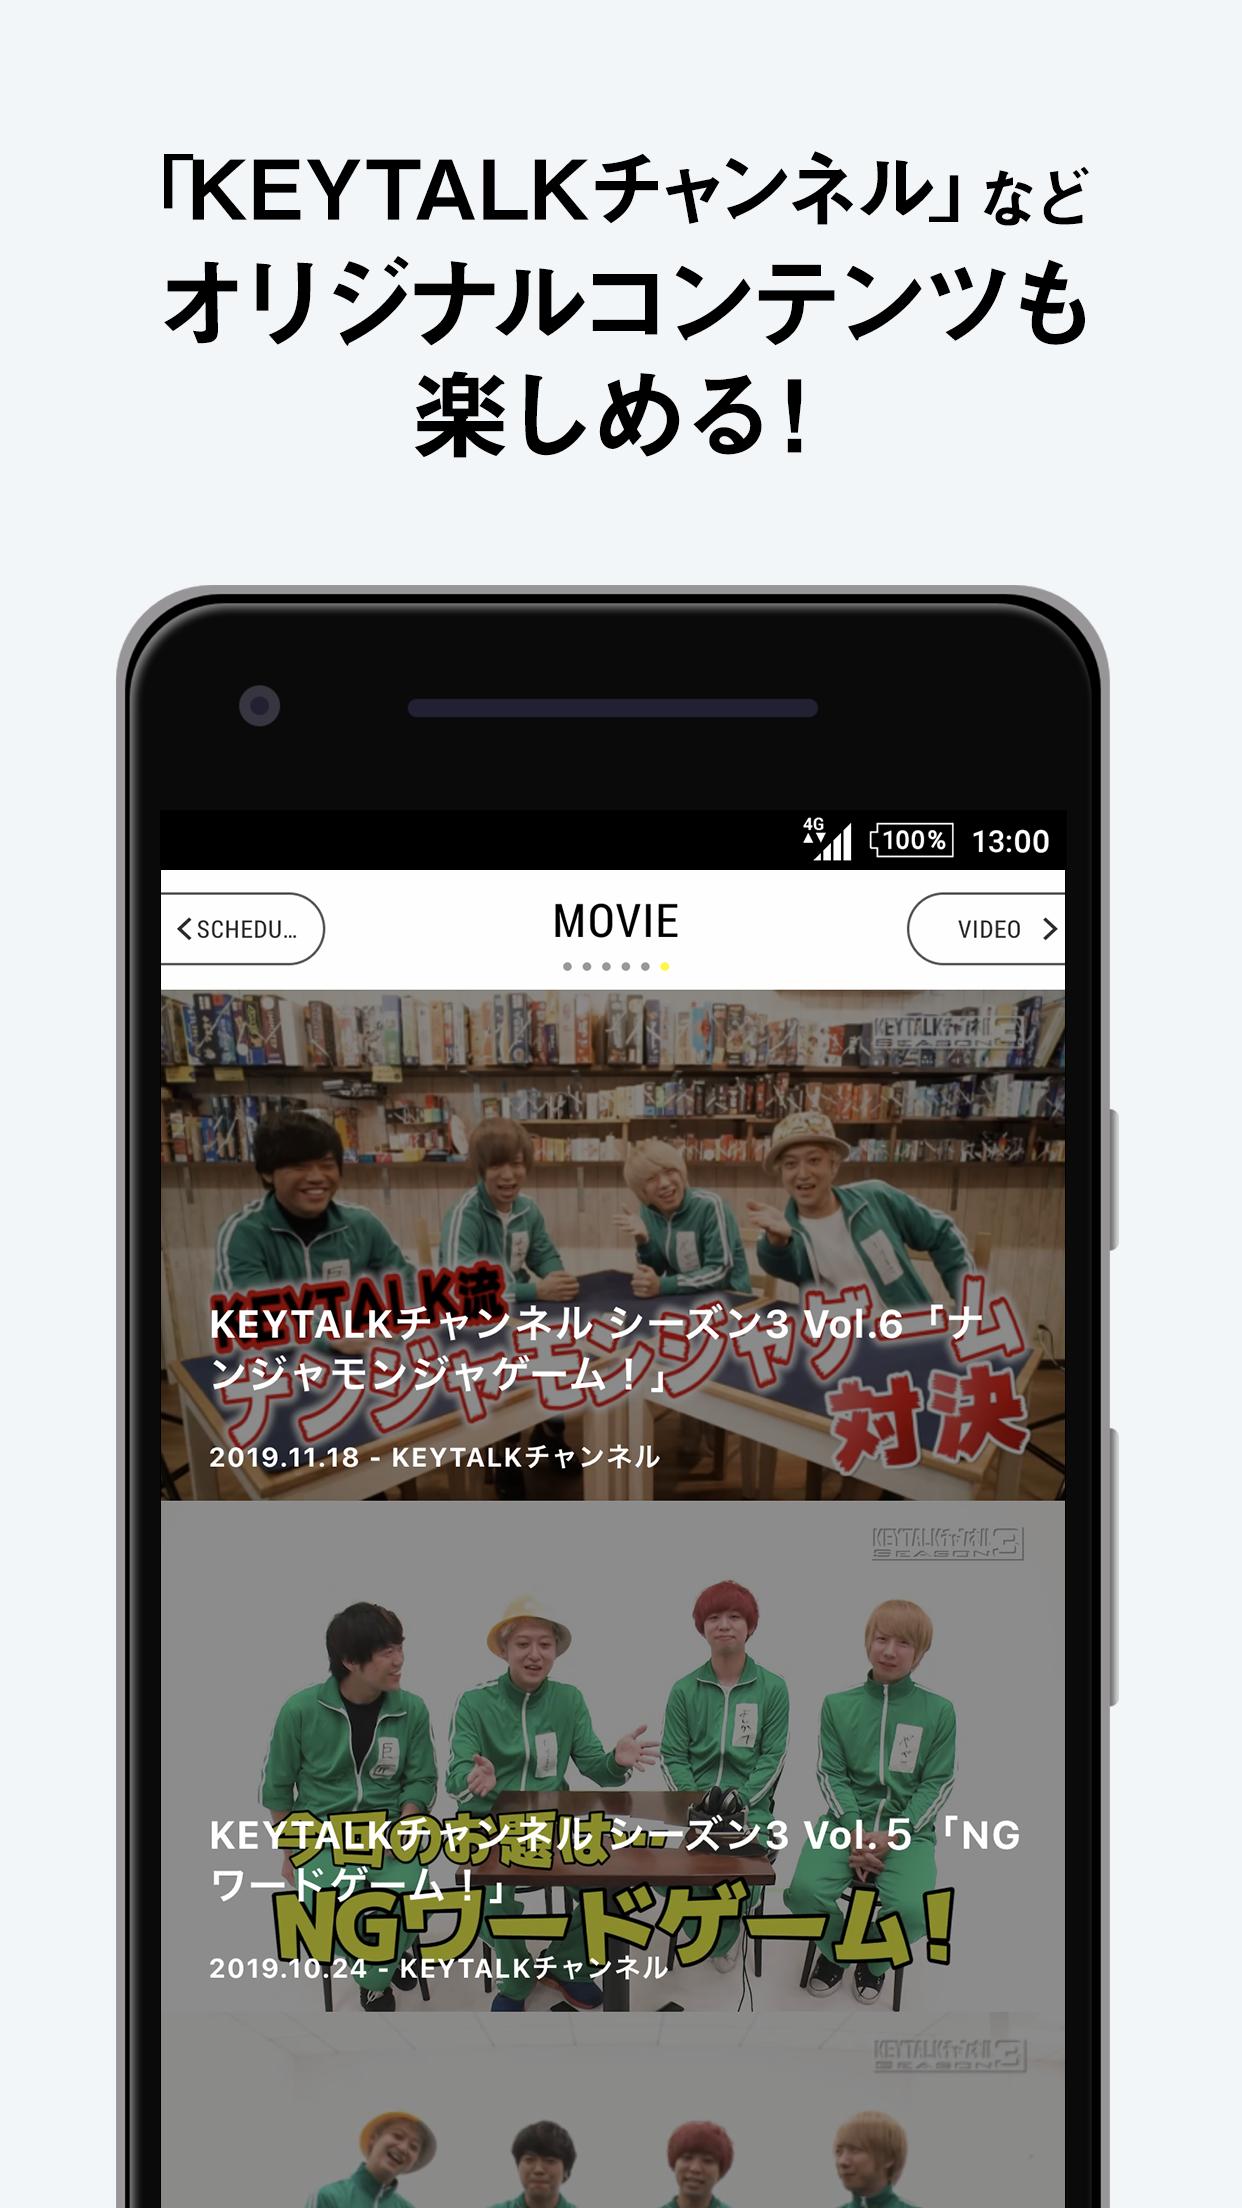 Keytalk For Android Apk Download